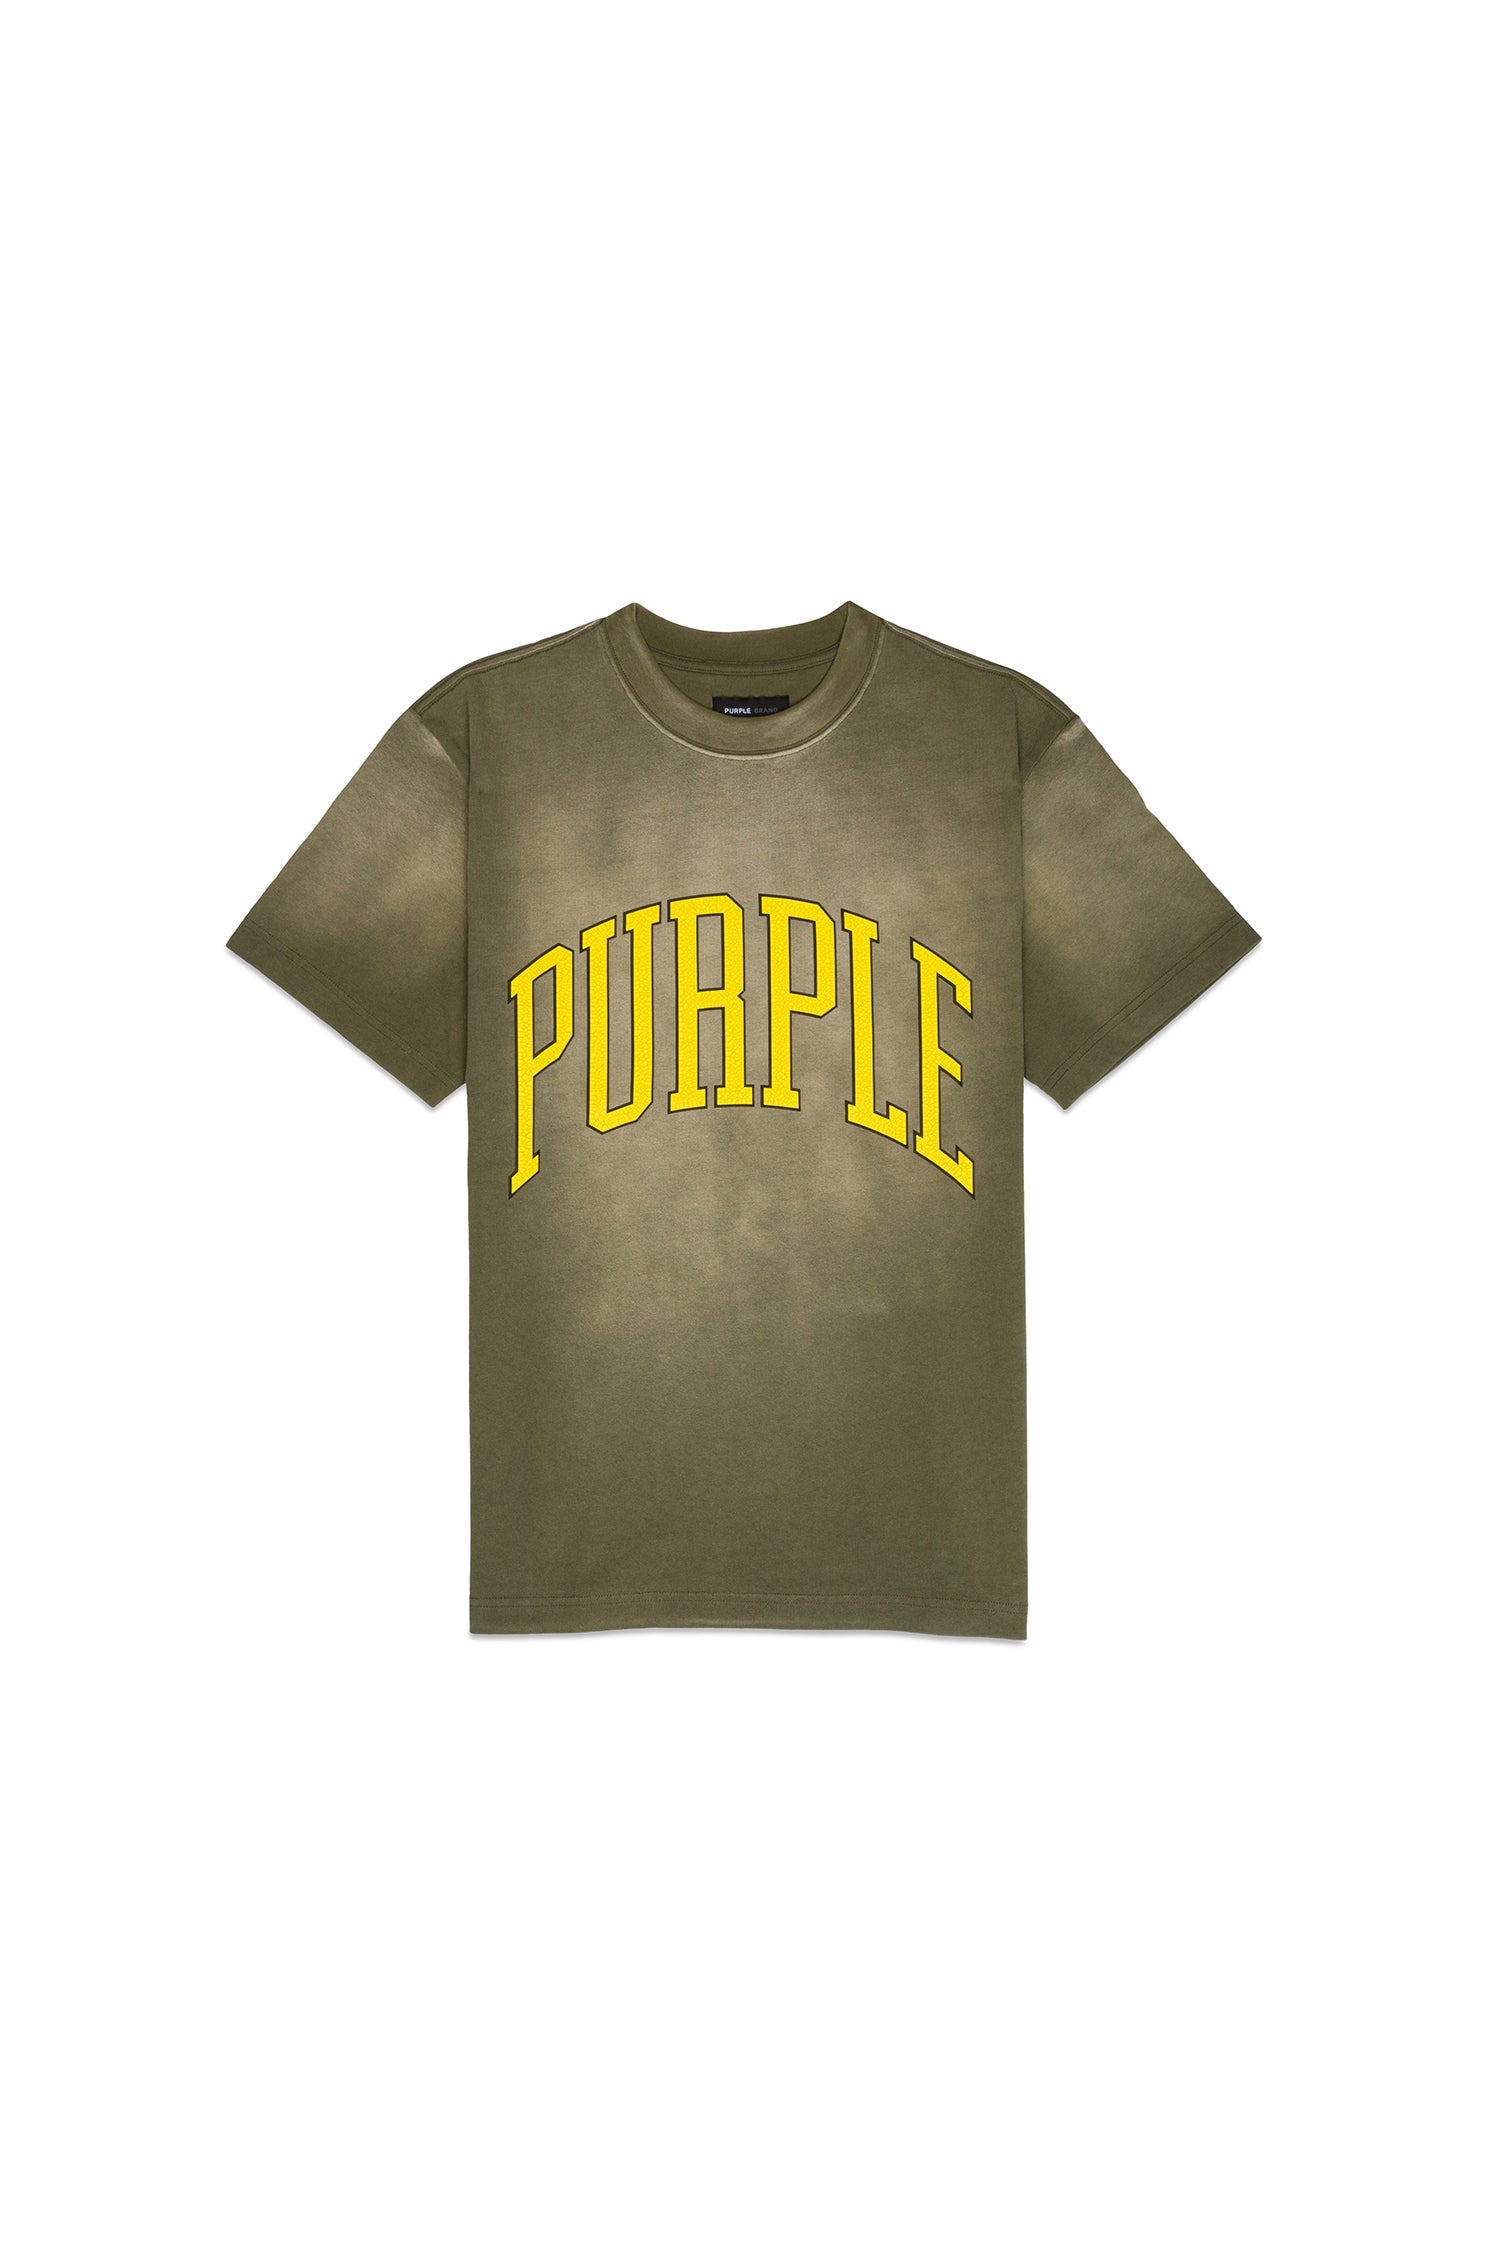 Men's Purple Brand Tagged T-shirt - Civilized Nation - Official Site